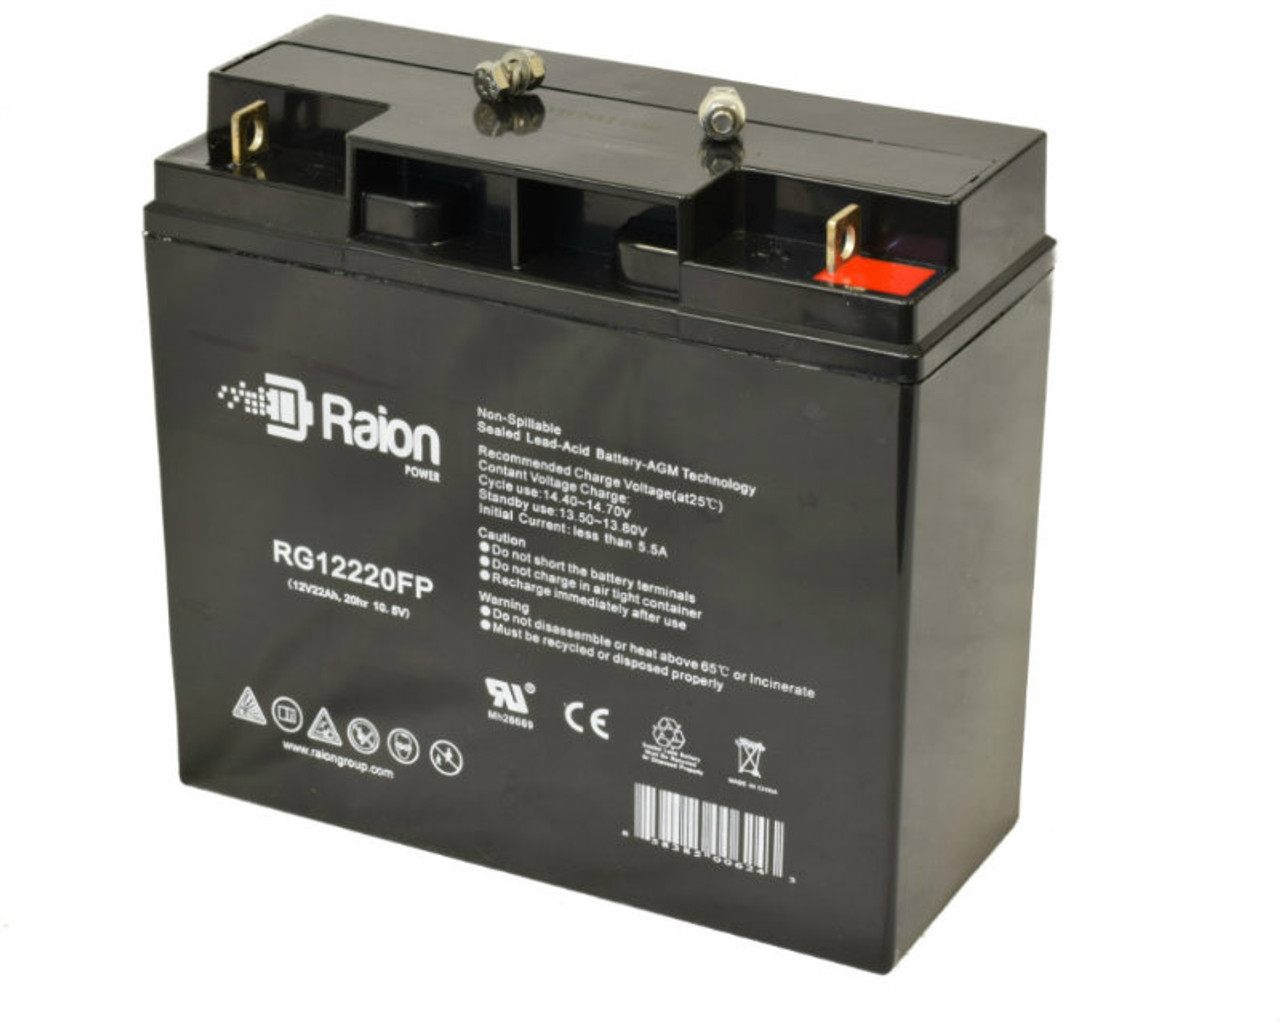 Raion Power Replacement 12V 22Ah Battery for Diehard 71988 Jump Starter - 1 Pack